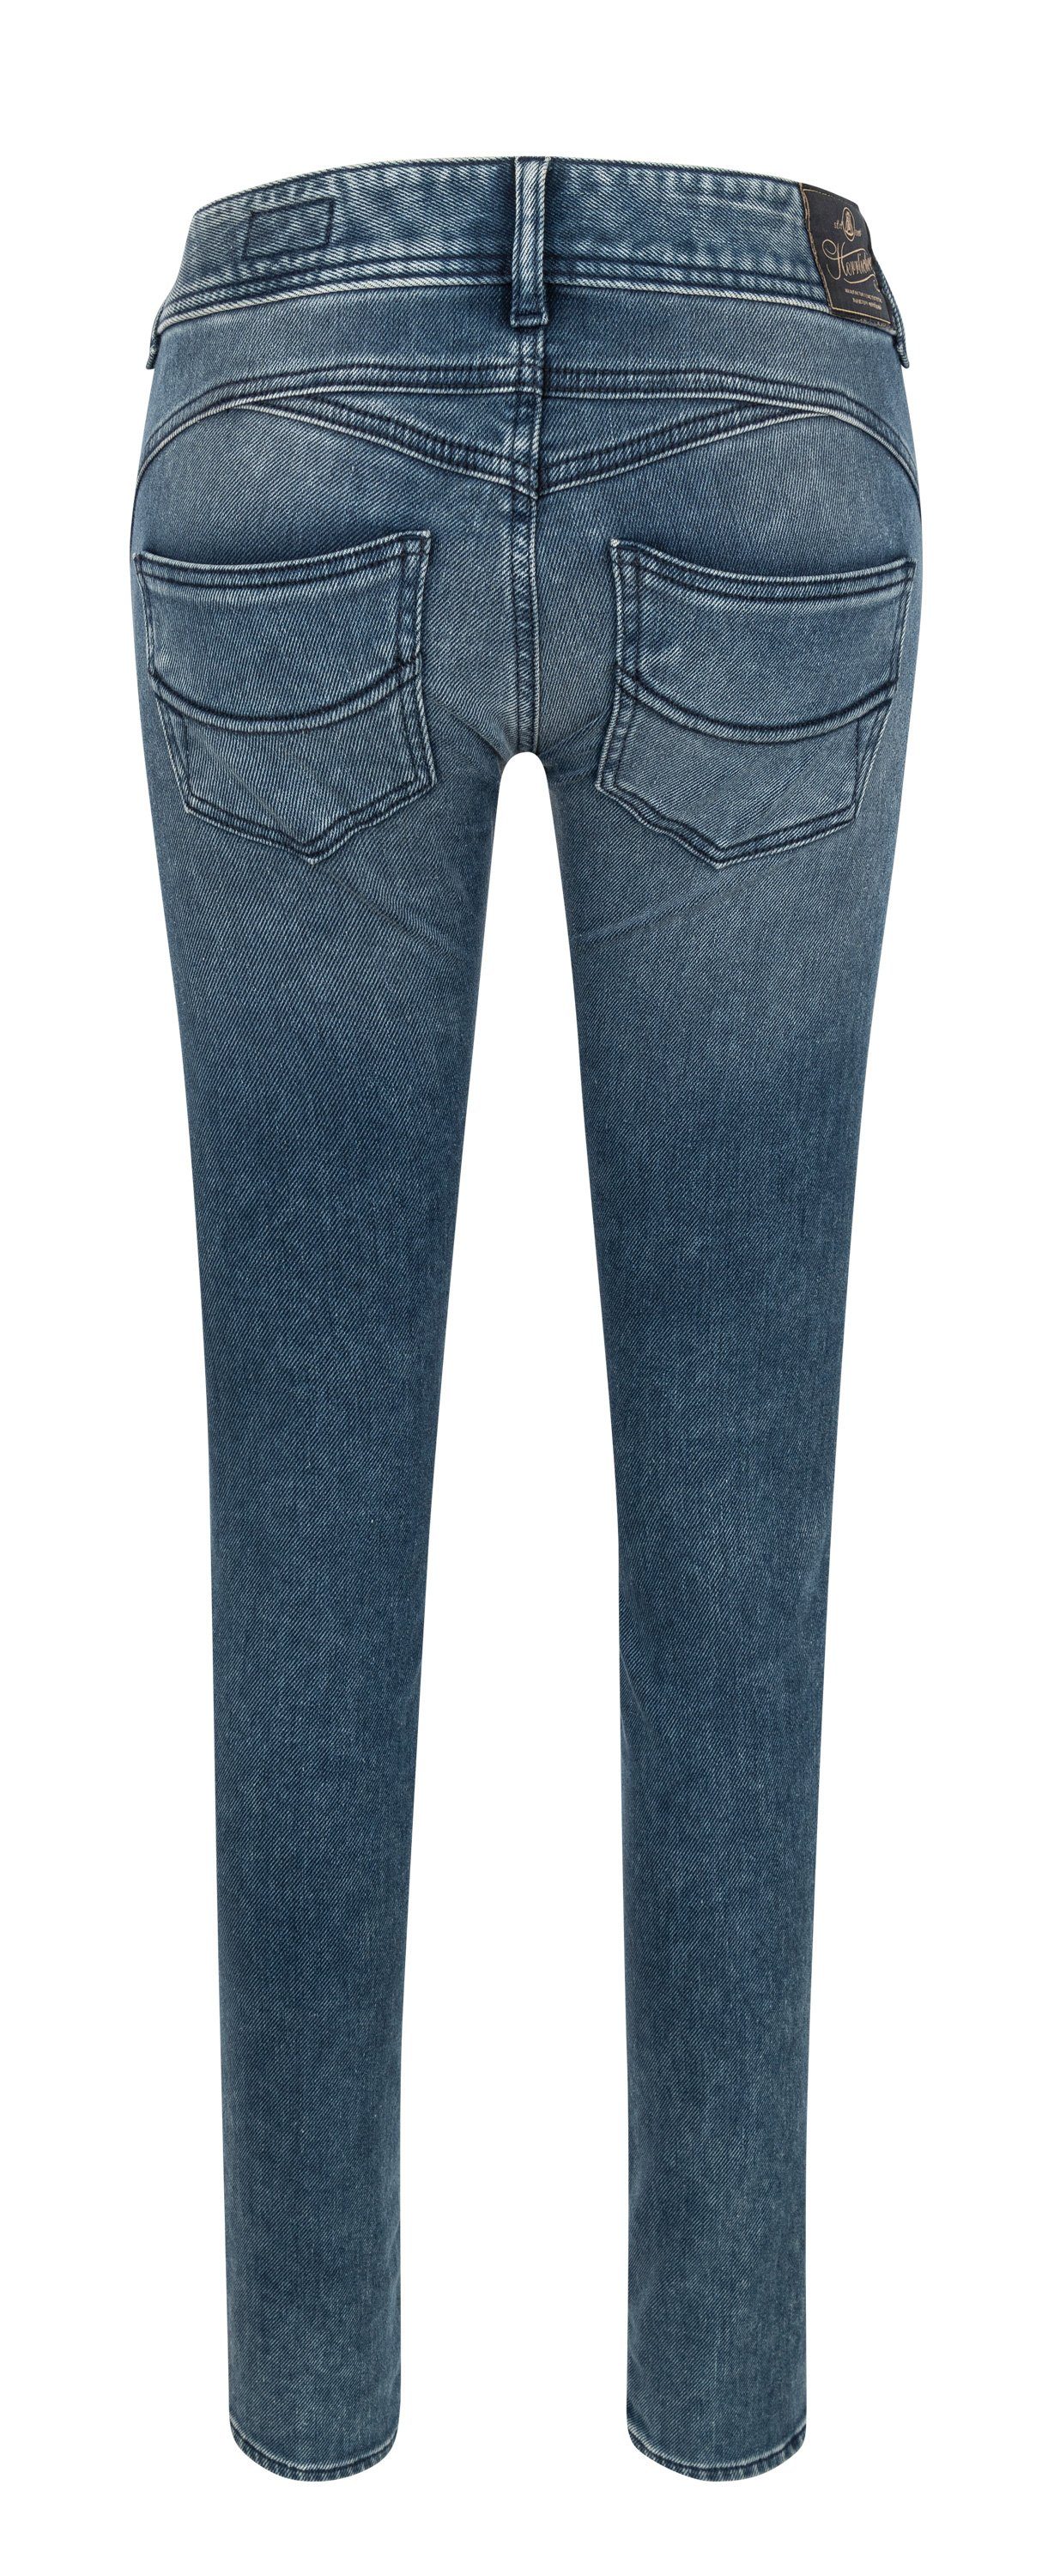 HERRLICHER THERMO Denim Stretch-Jeans 5606-OD400-949 Herrlicher Organic shadow blue GILA - Slim